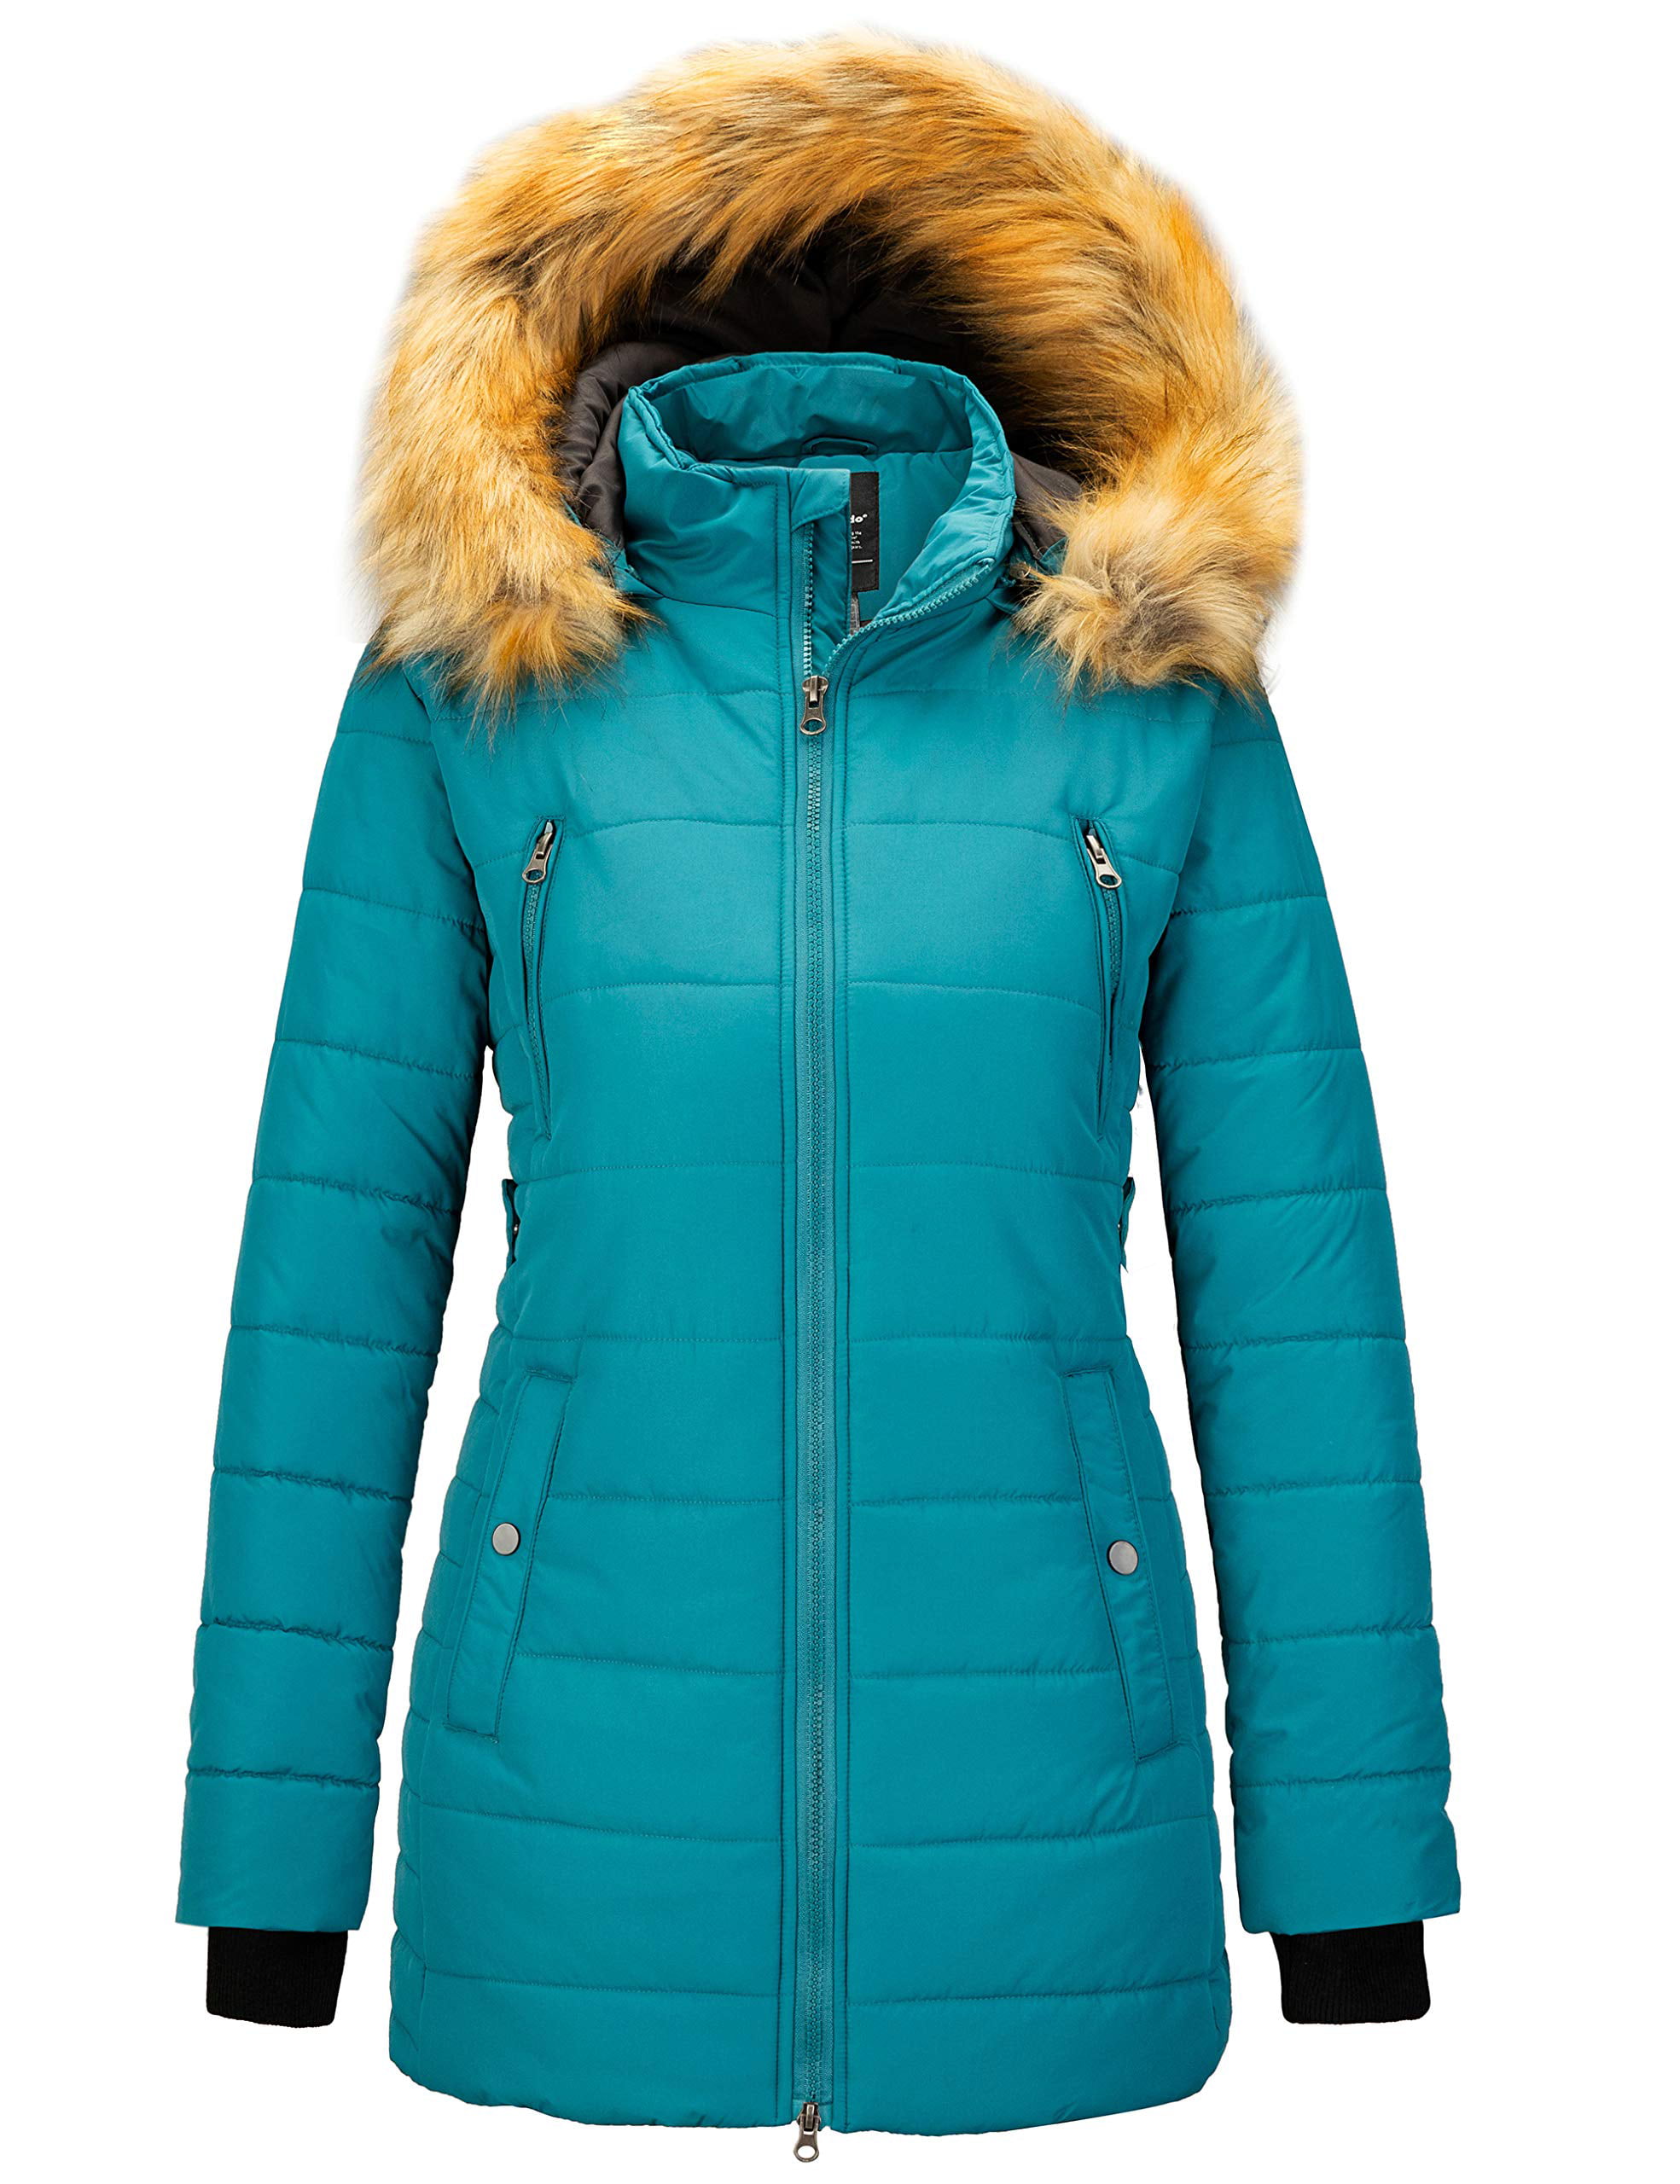 Wantdo Women's Quilted Winter Coats Hooded Warm Puffer Jacket with Fleece Hood